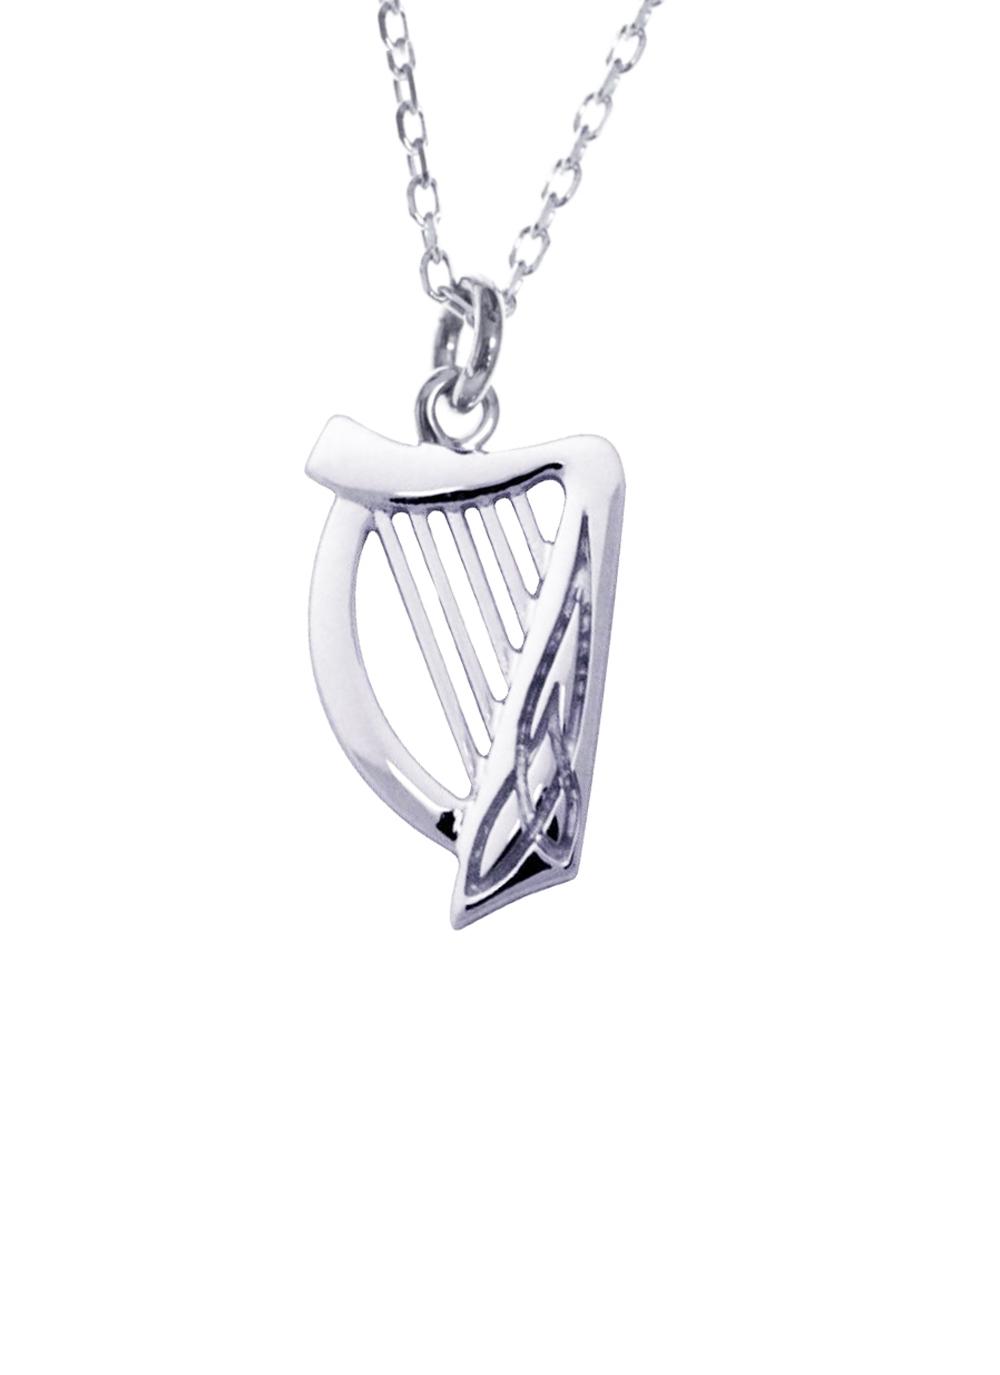 # 171S Irish Harp Necklace, Details about   Silver Irish Harp Pendant Irish Coin Jewelry